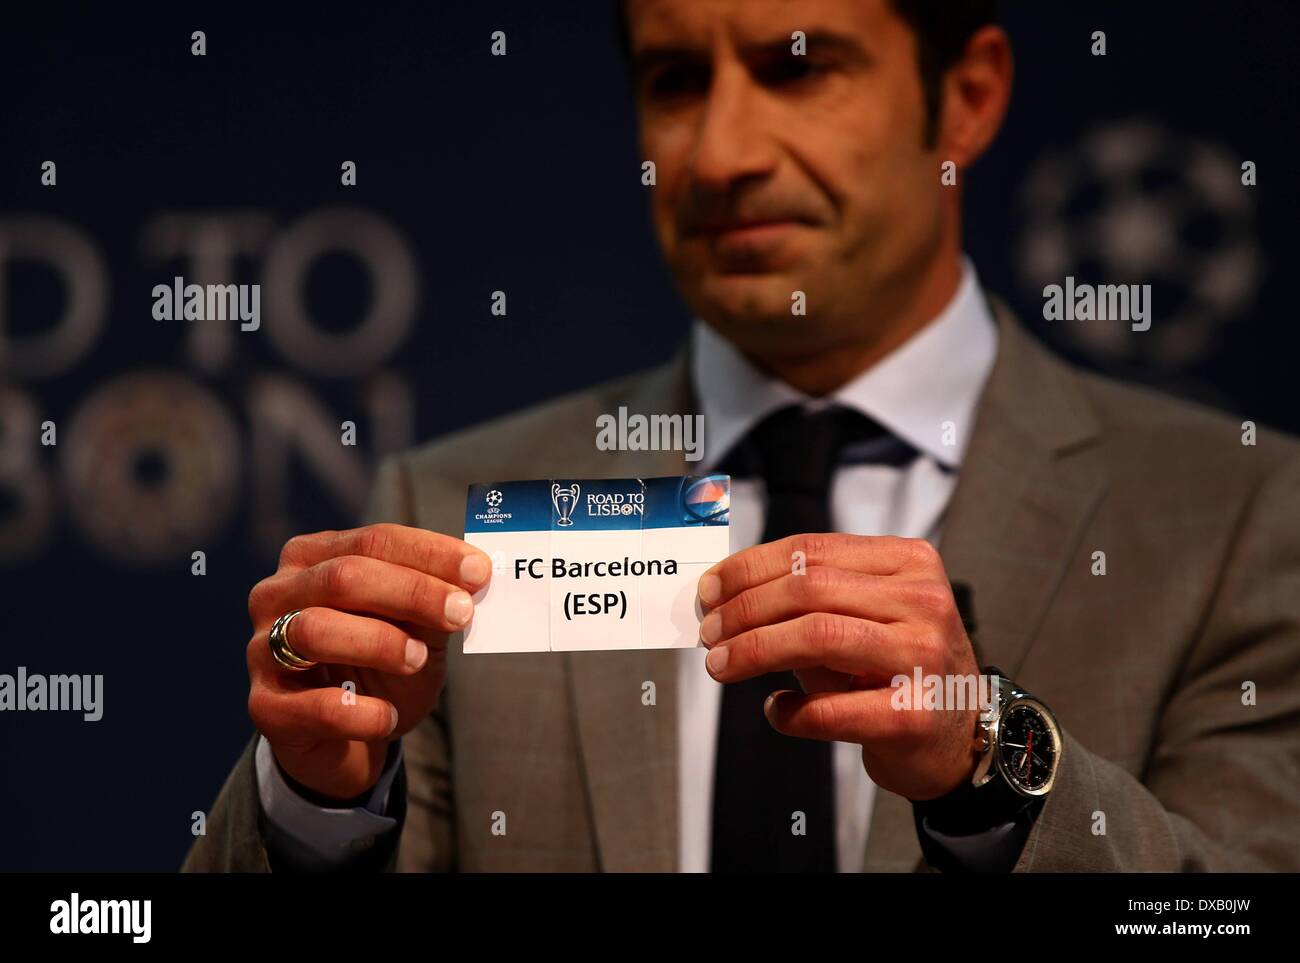 Nyon, 21.03.2014, Fussball, Auslosung Champions League, Das Ldes FC Barcellona (ESP) wird gezogen Foto Stock